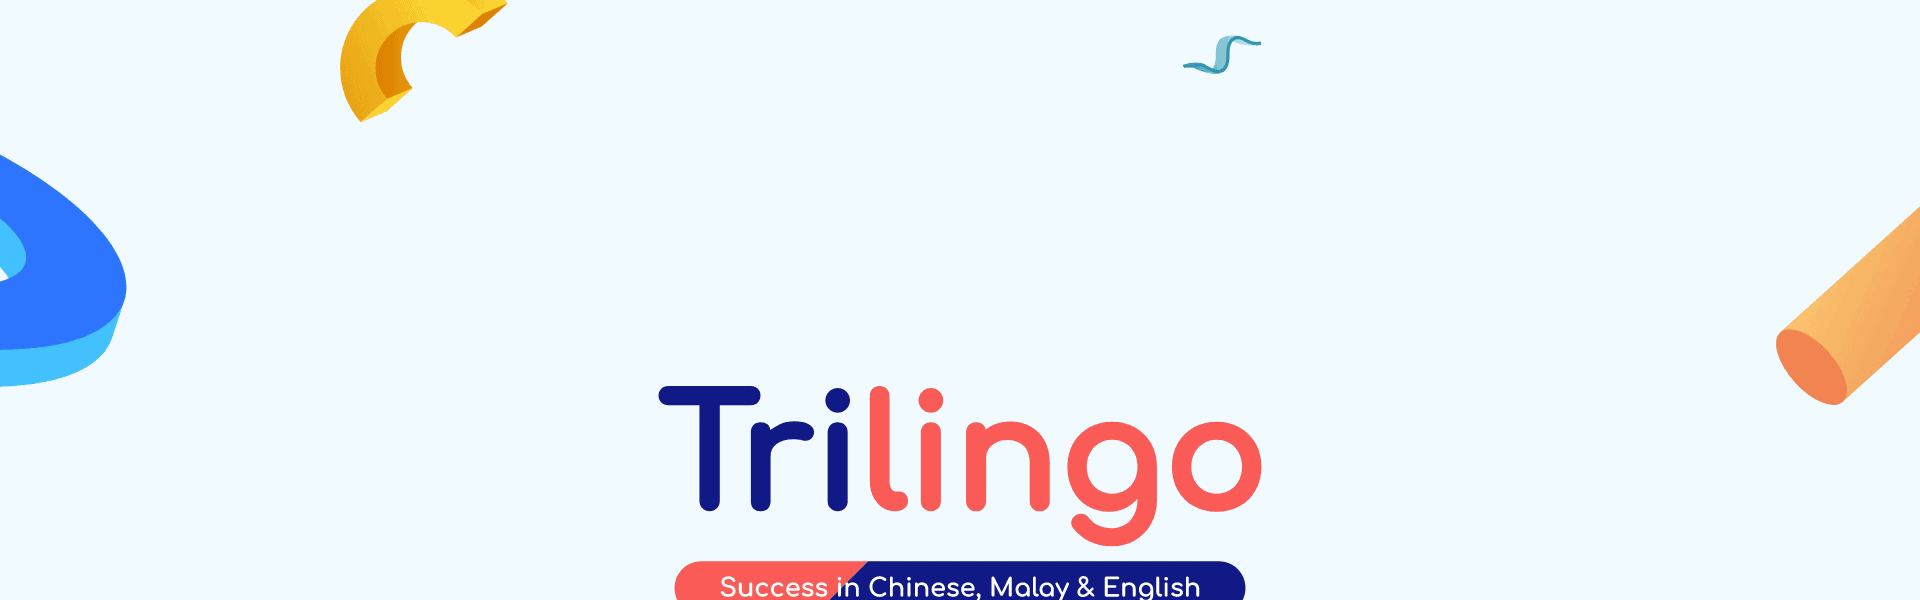 Trillingo---Mock-up (1)